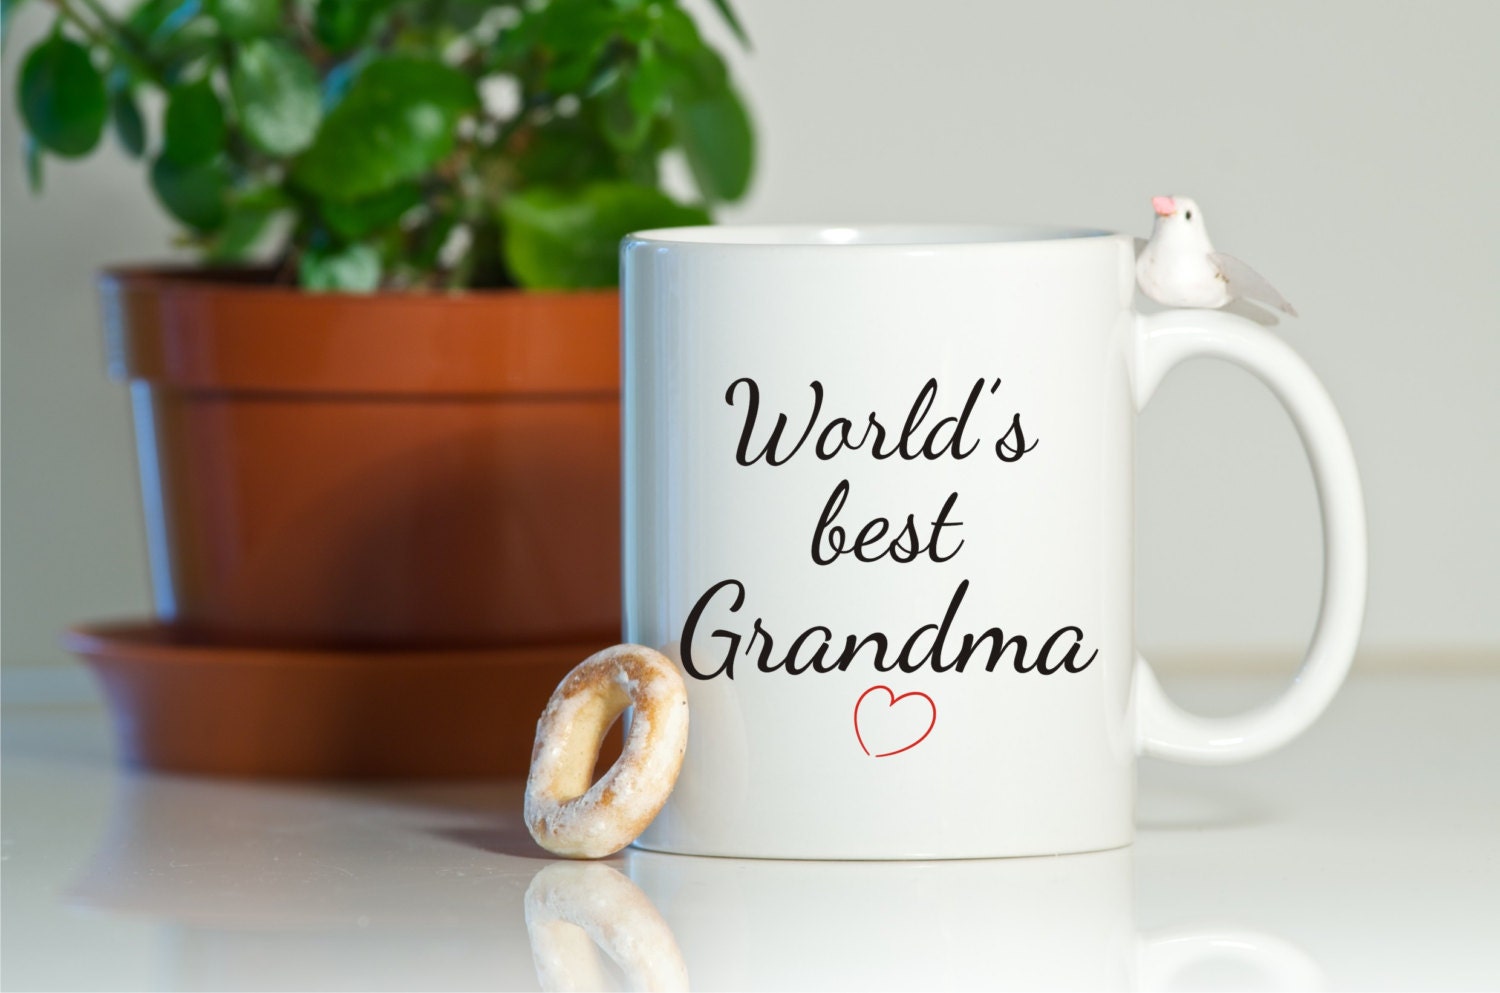 Worlds best Grandma-Gift for grandma-Gift for by GiftIdeasShop